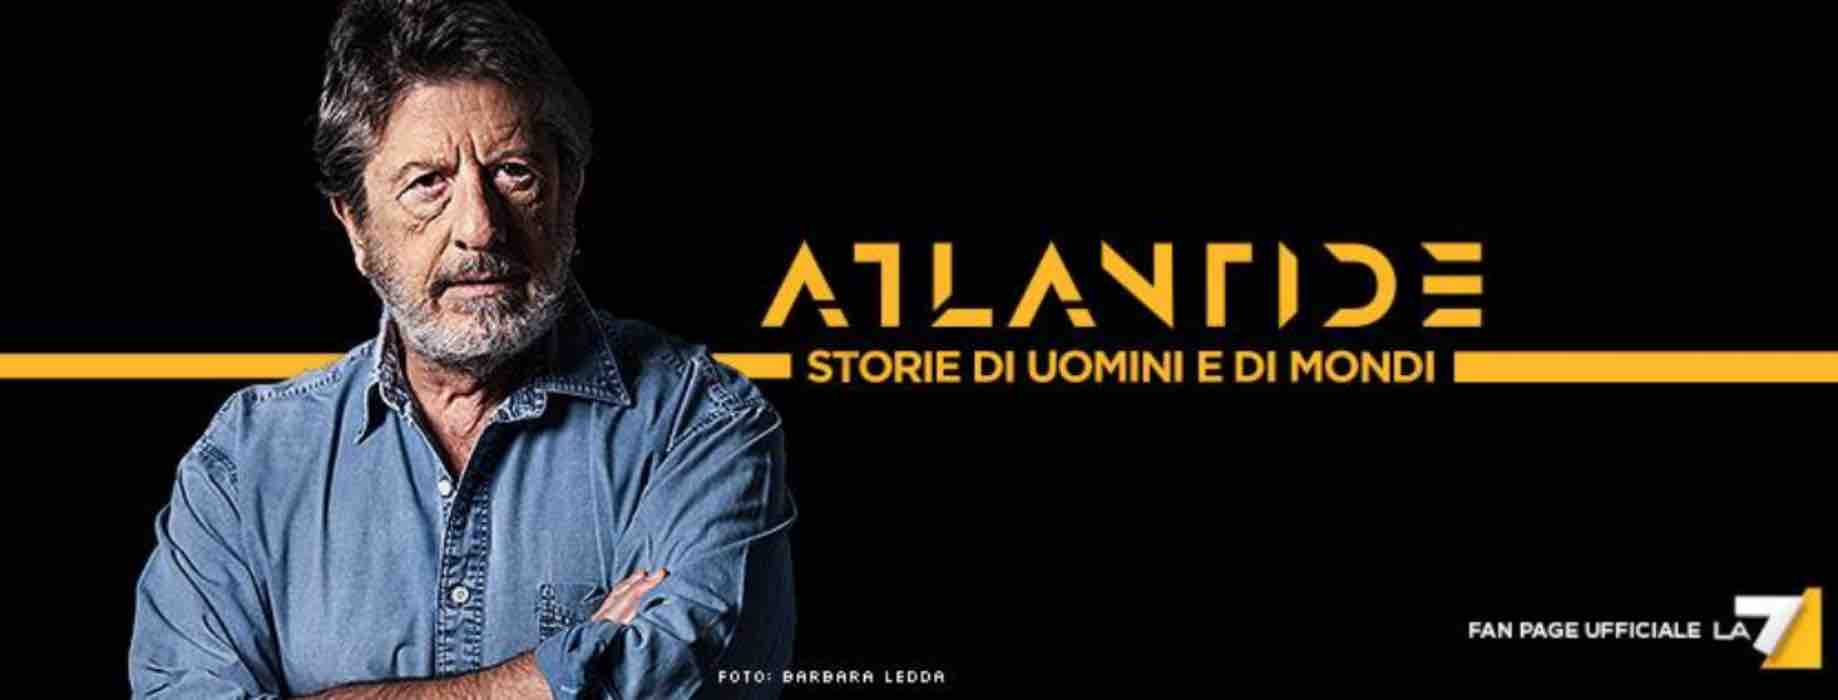 La 7, 'Atlantide' stasera in tv: "La grande stangata"